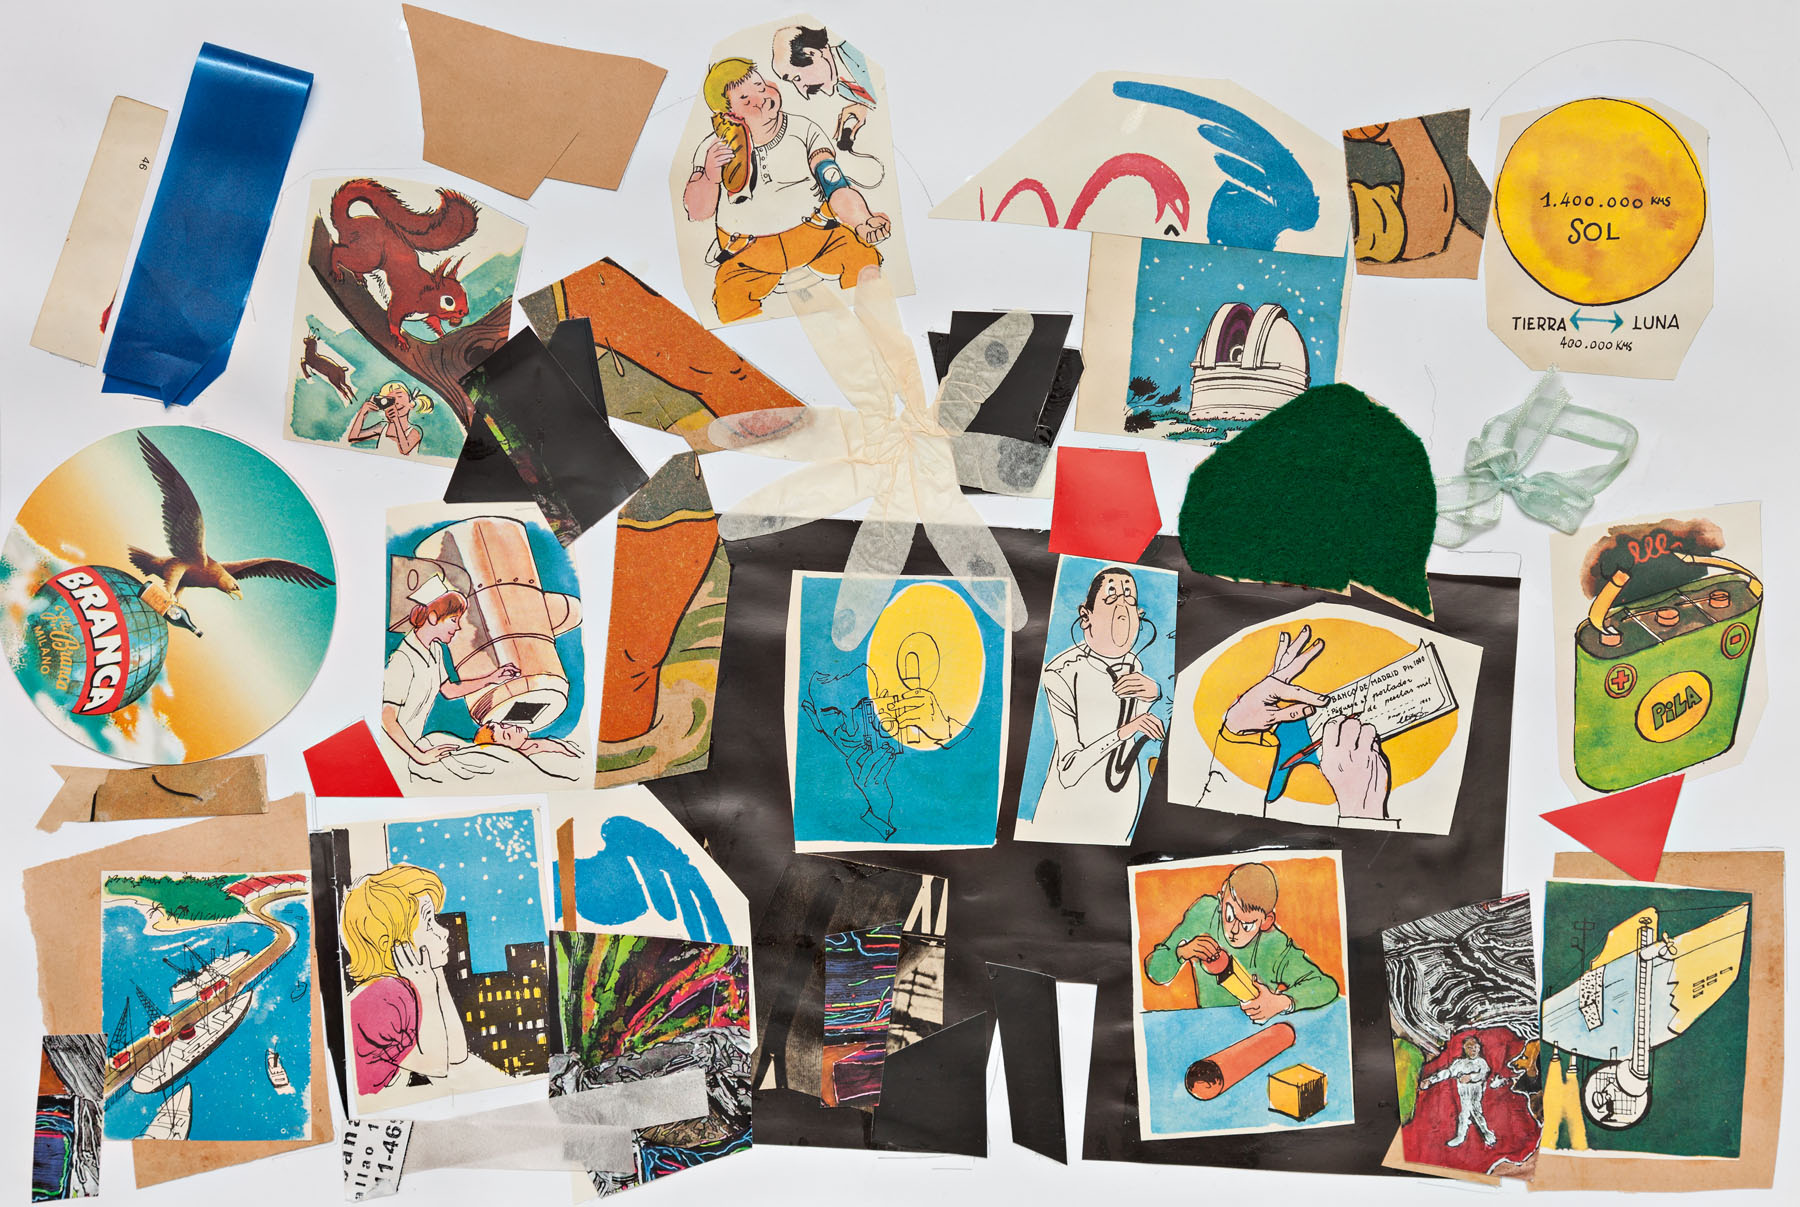 Serie Cuarentena, papel collage, 32 cm x 47 cm, 2020